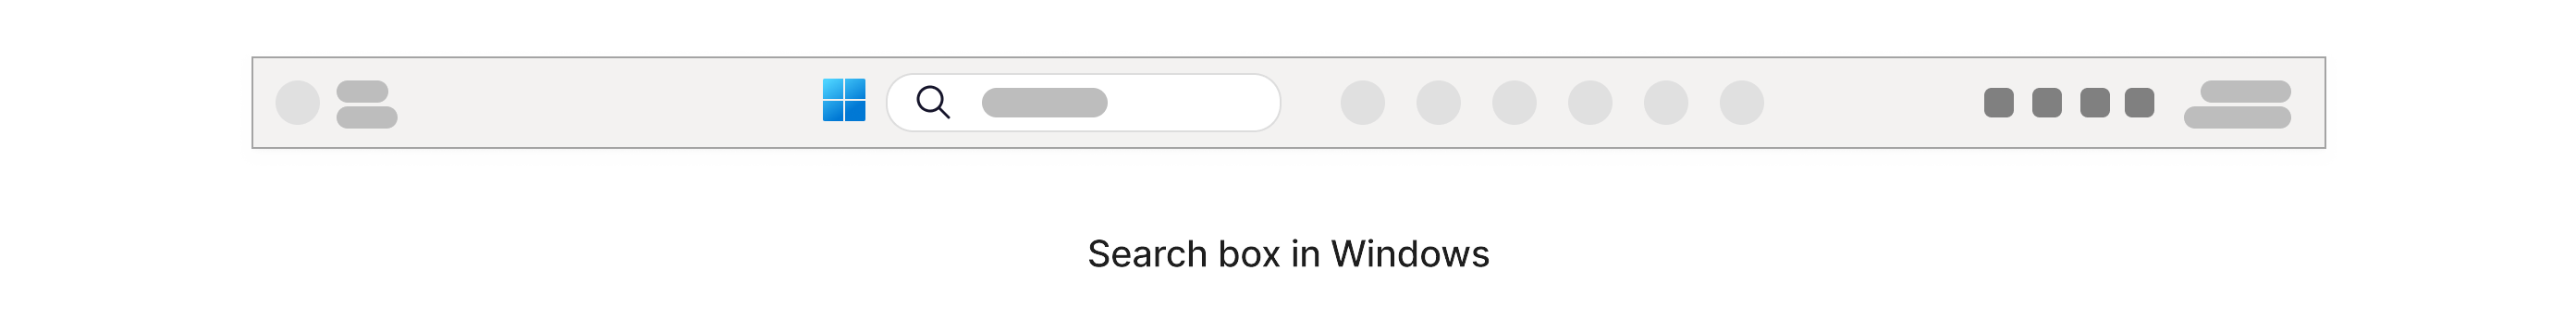 Kotak pencarian dengan ikon pembesar di dalamnya terletak di taskbar Windows di bagian bawah layar.